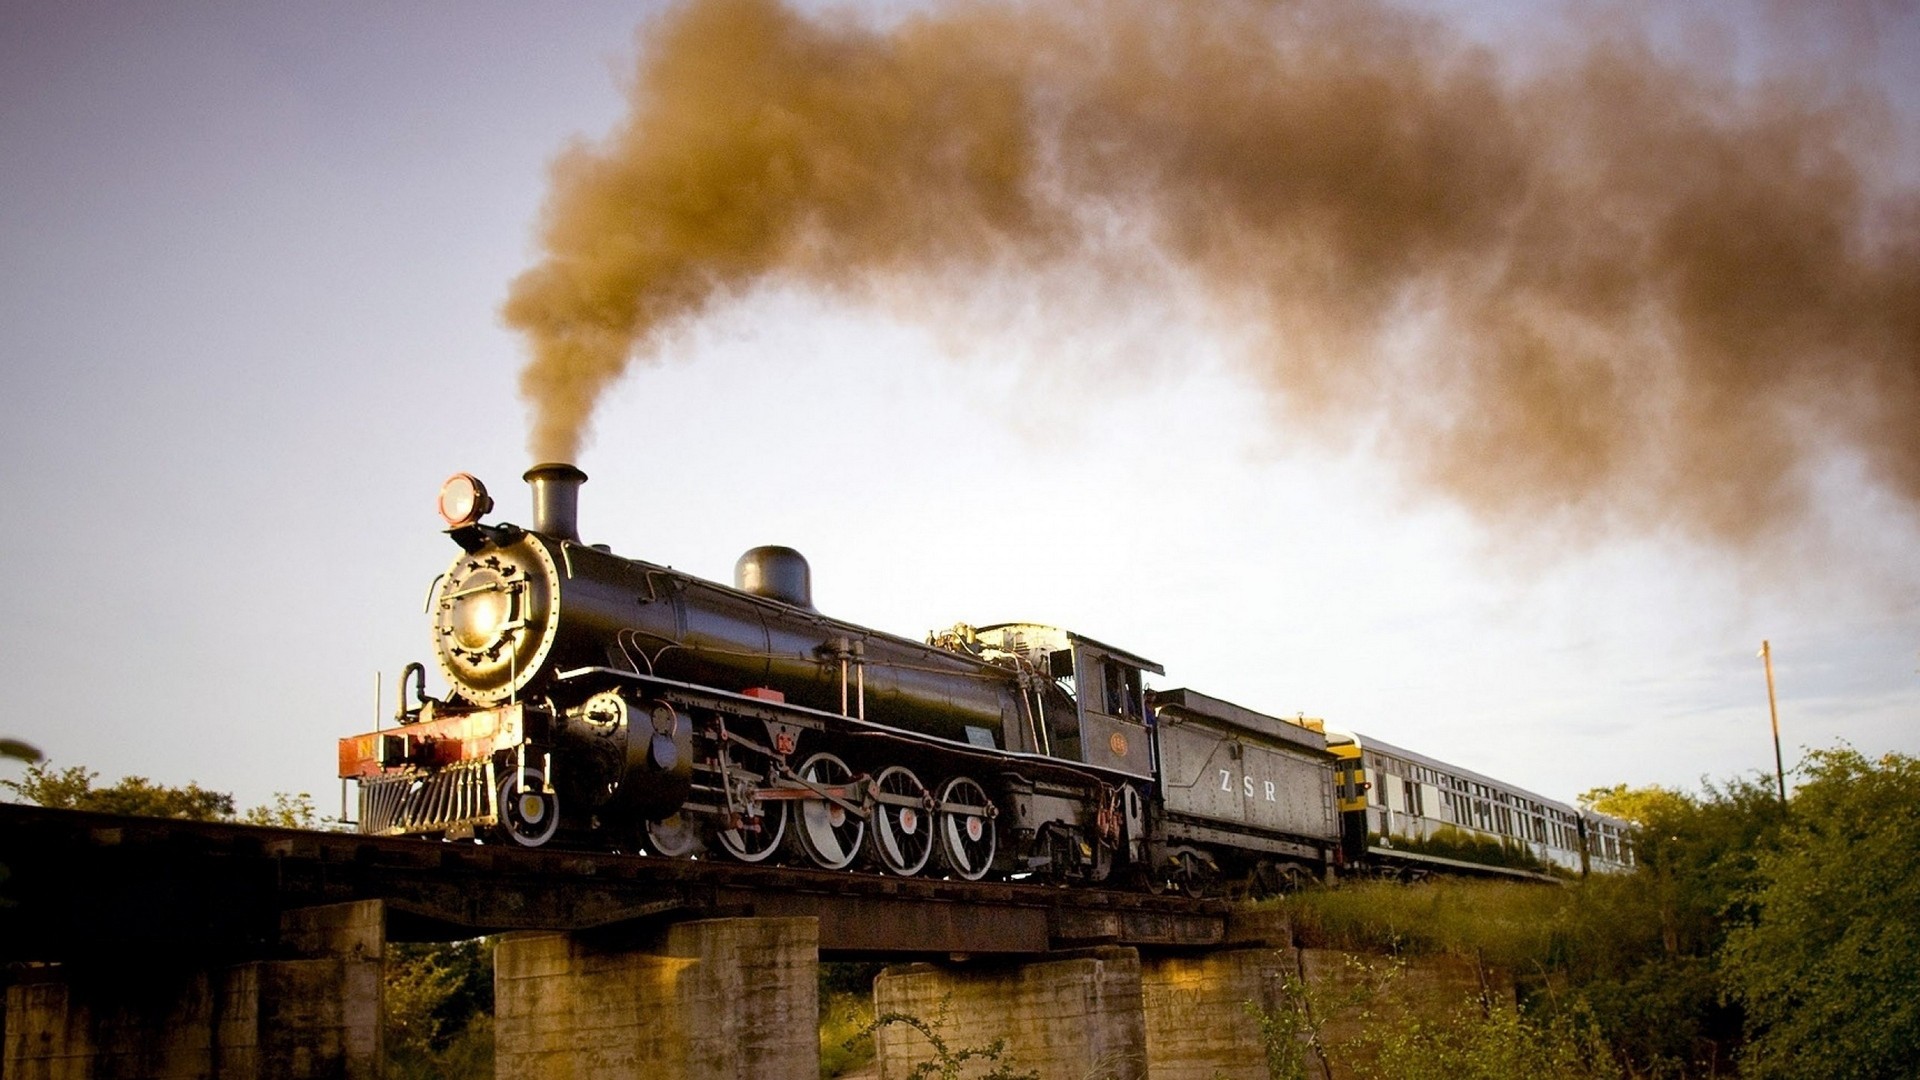 Free photo A steam locomotive on a stone bridge